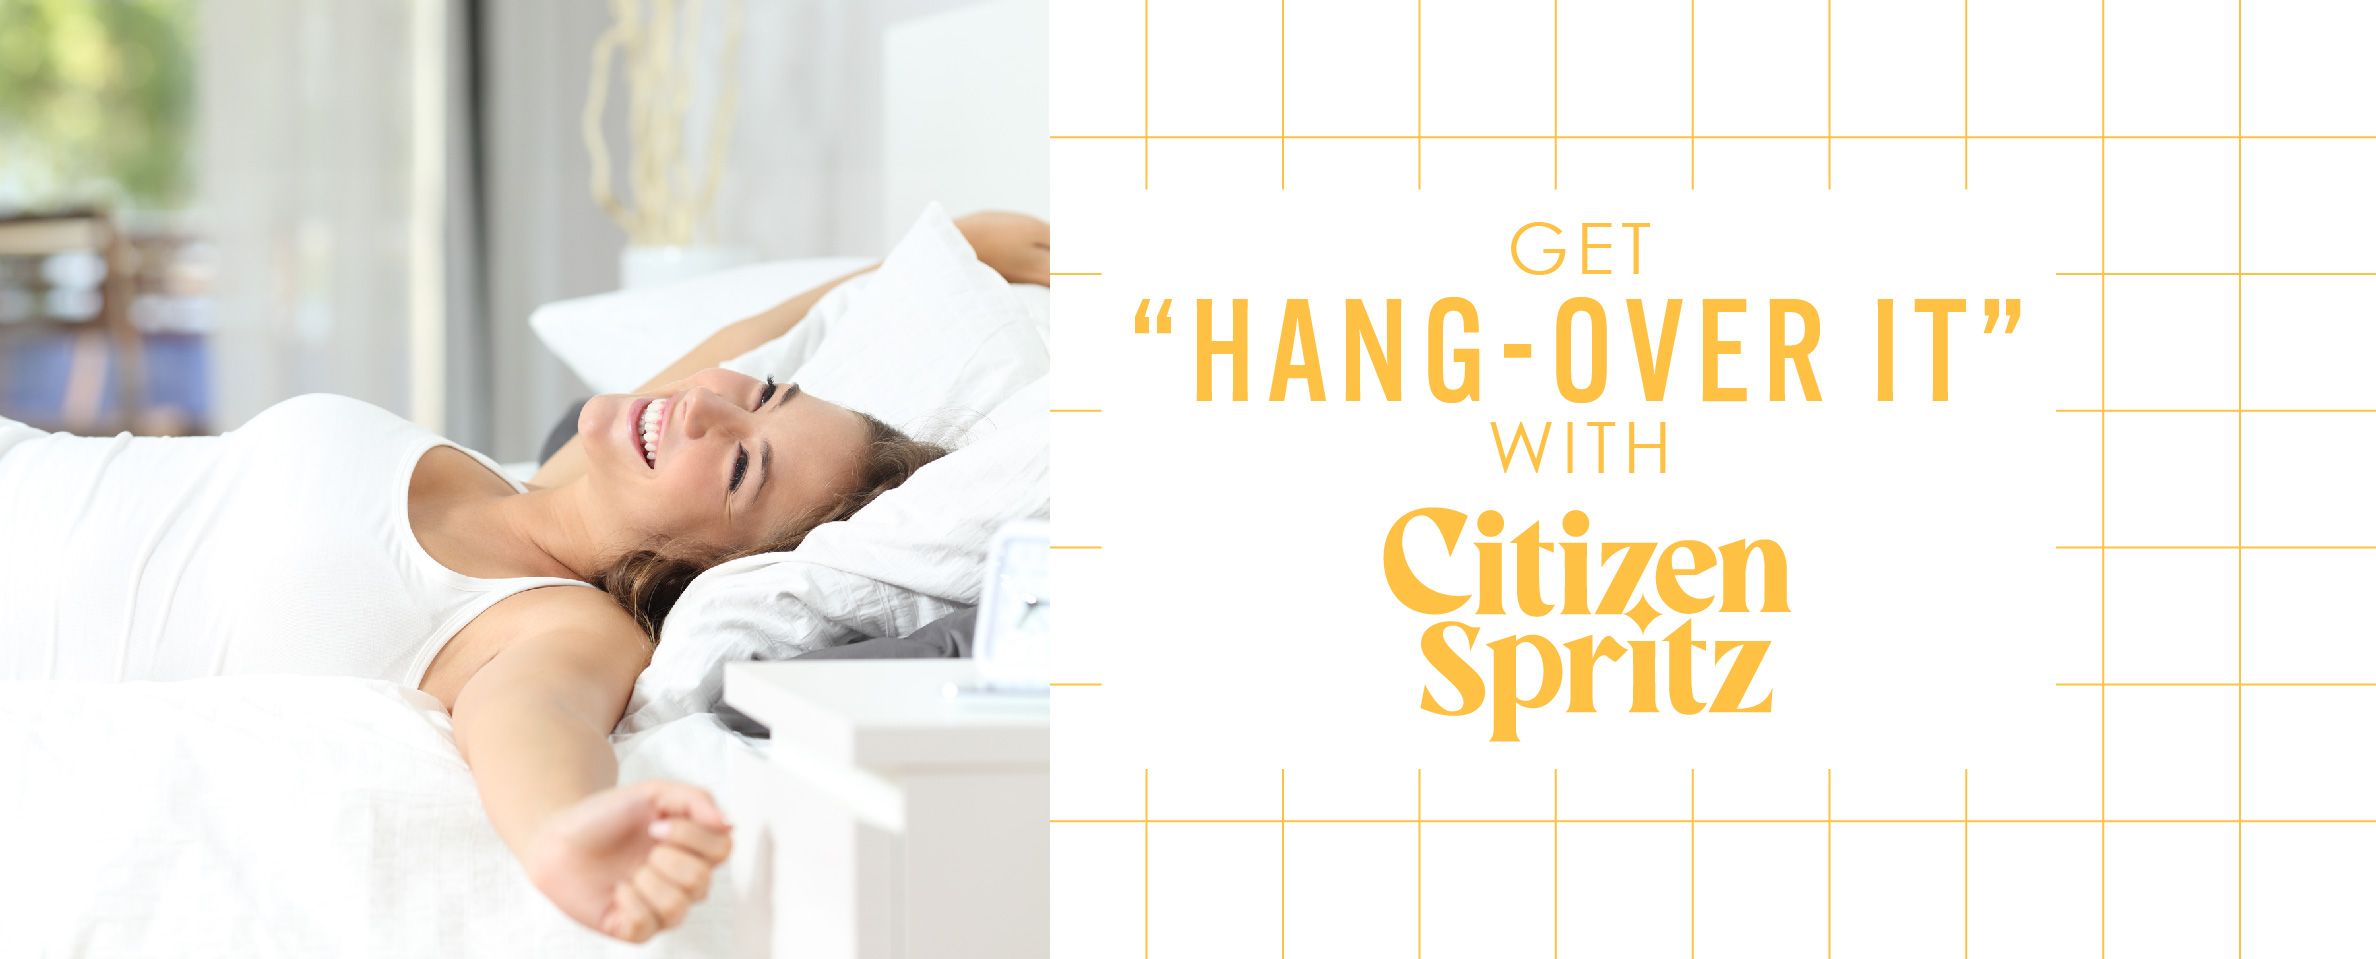 get "hang-over" it with citizen spritz